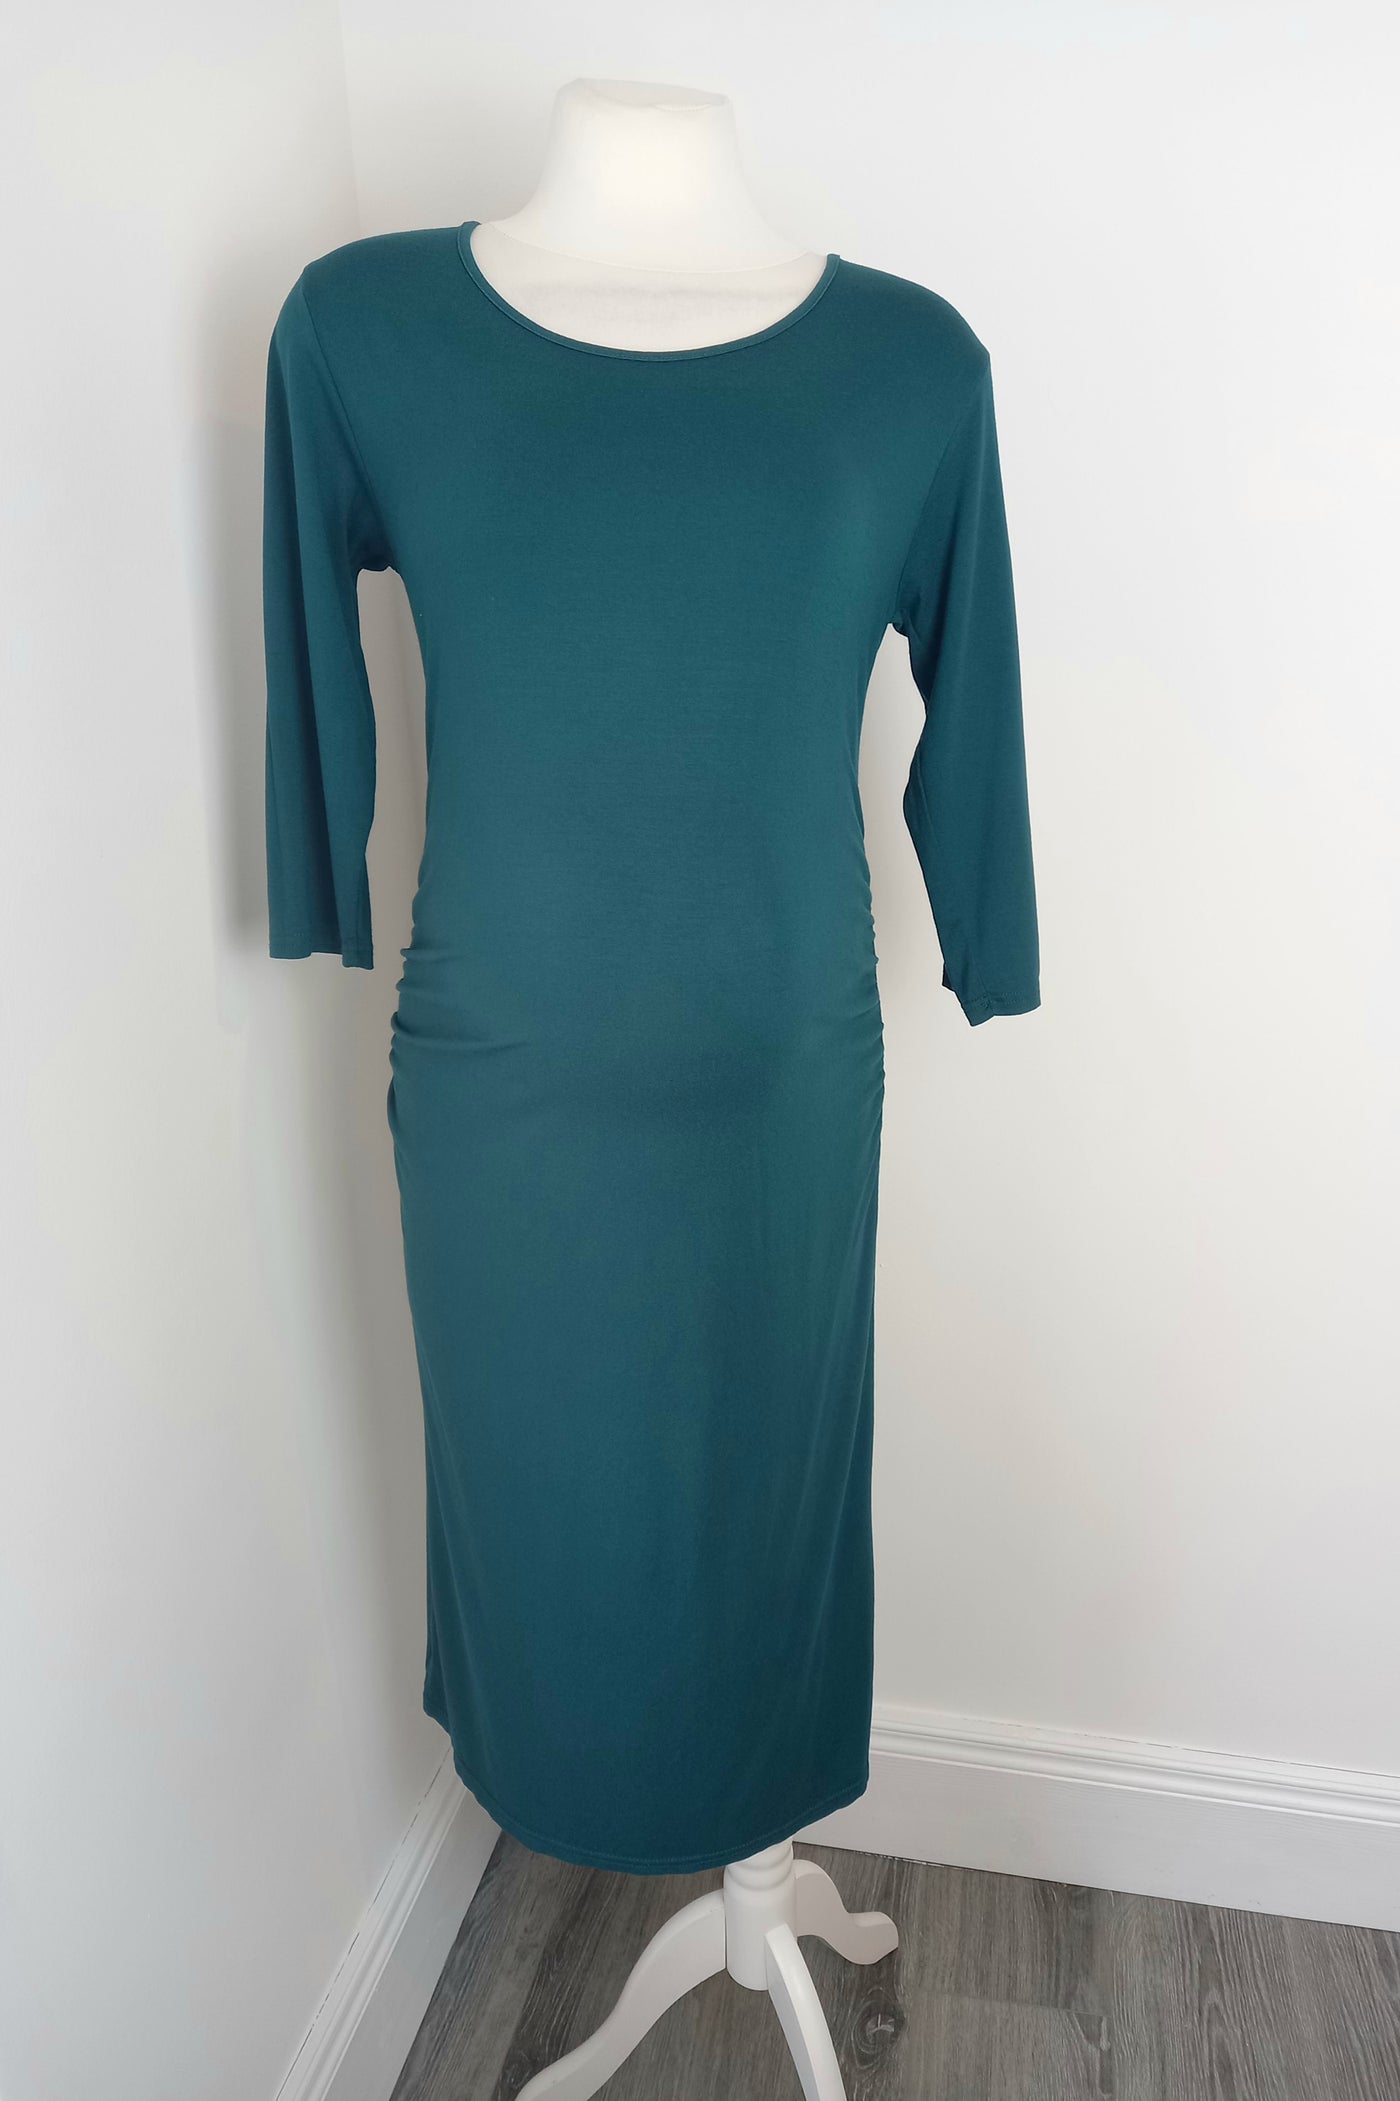 Happy Mama green 3/4 sleeve stretch dress - Size XL (Approx UK 14/16)